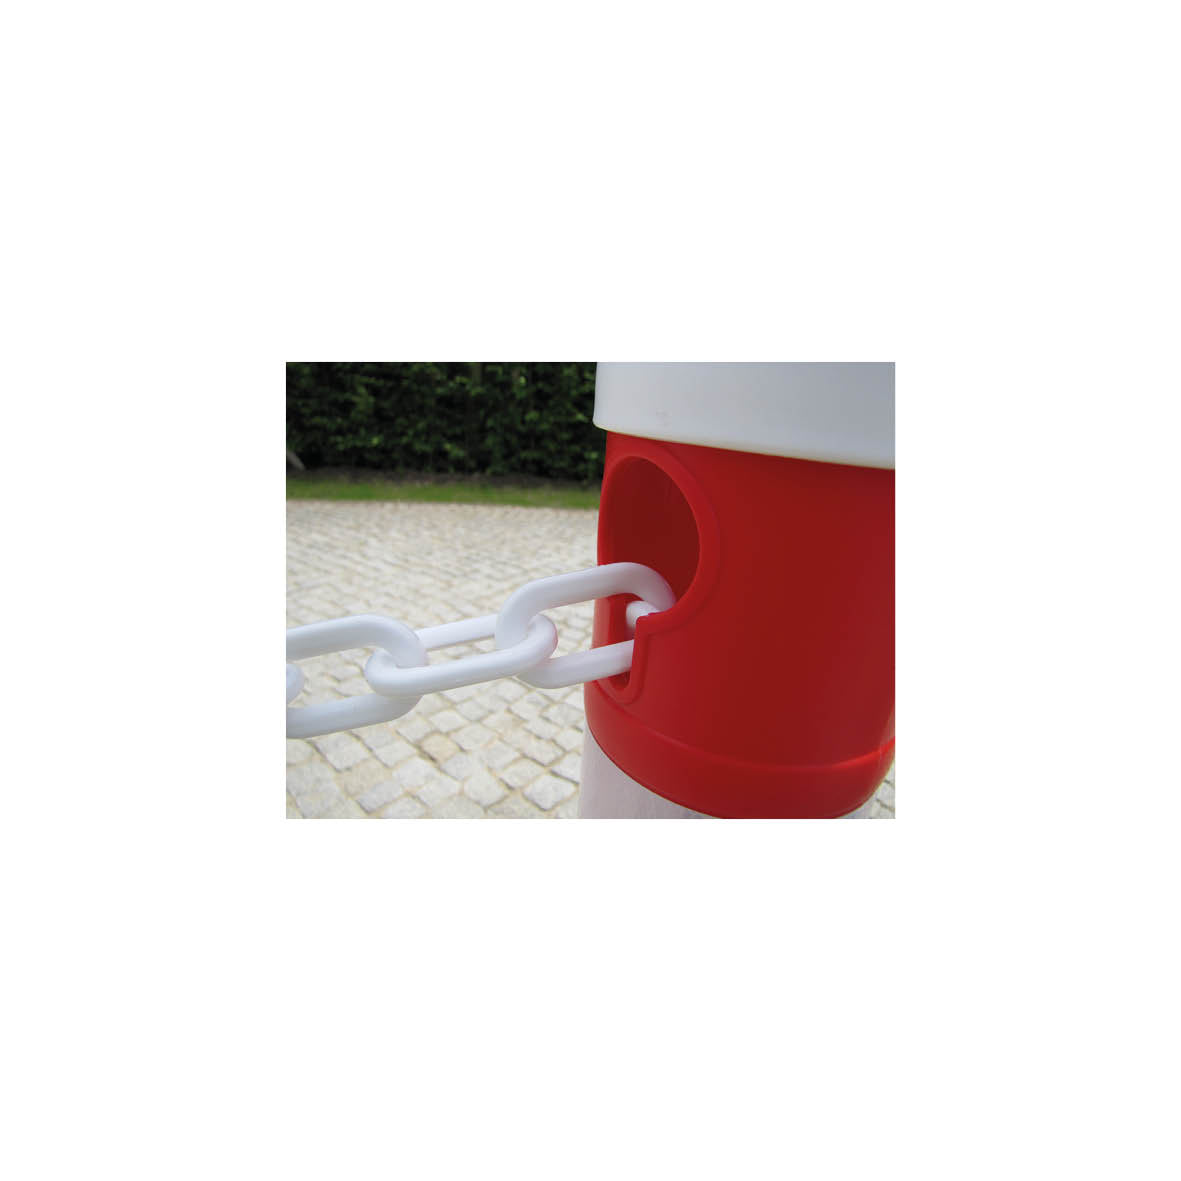 Kettenständer-Set MegaMax, rot-weiss, 6 Pfosten, 1 Kette, ø 11 cm, Höhe 120 cm